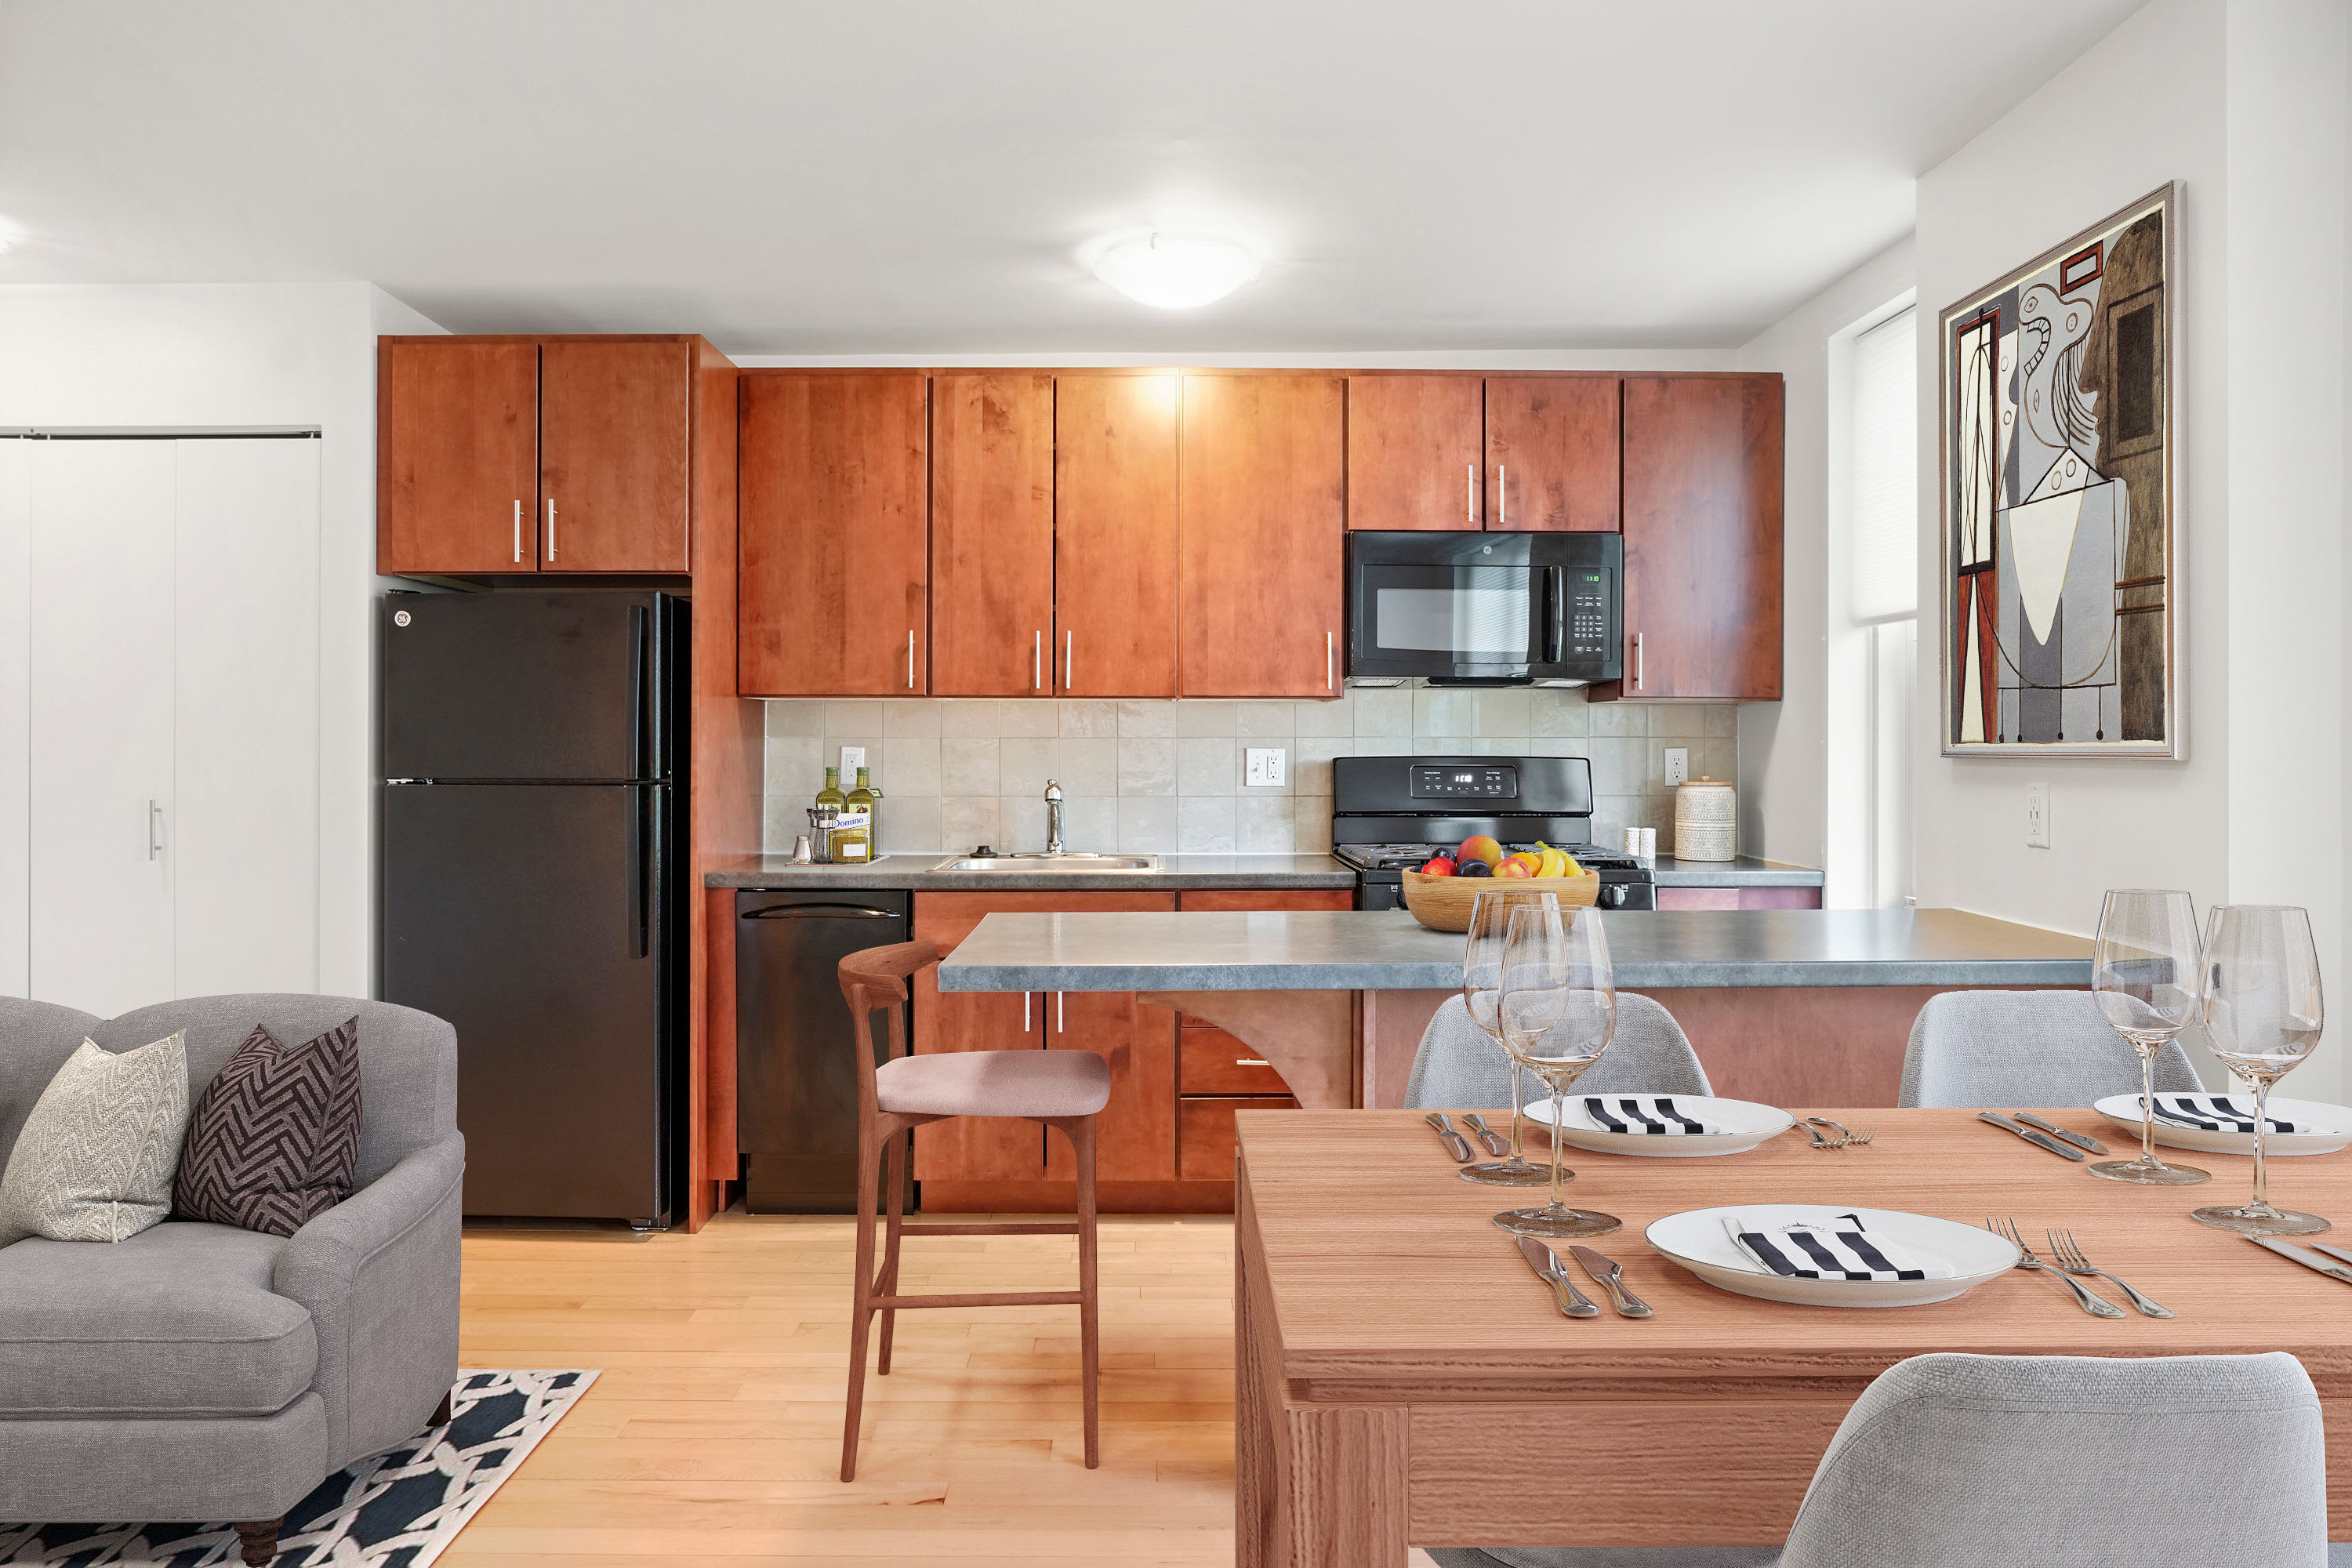 Living Room & modern Kitchen at Camelot Court in Brighton, Massachusetts